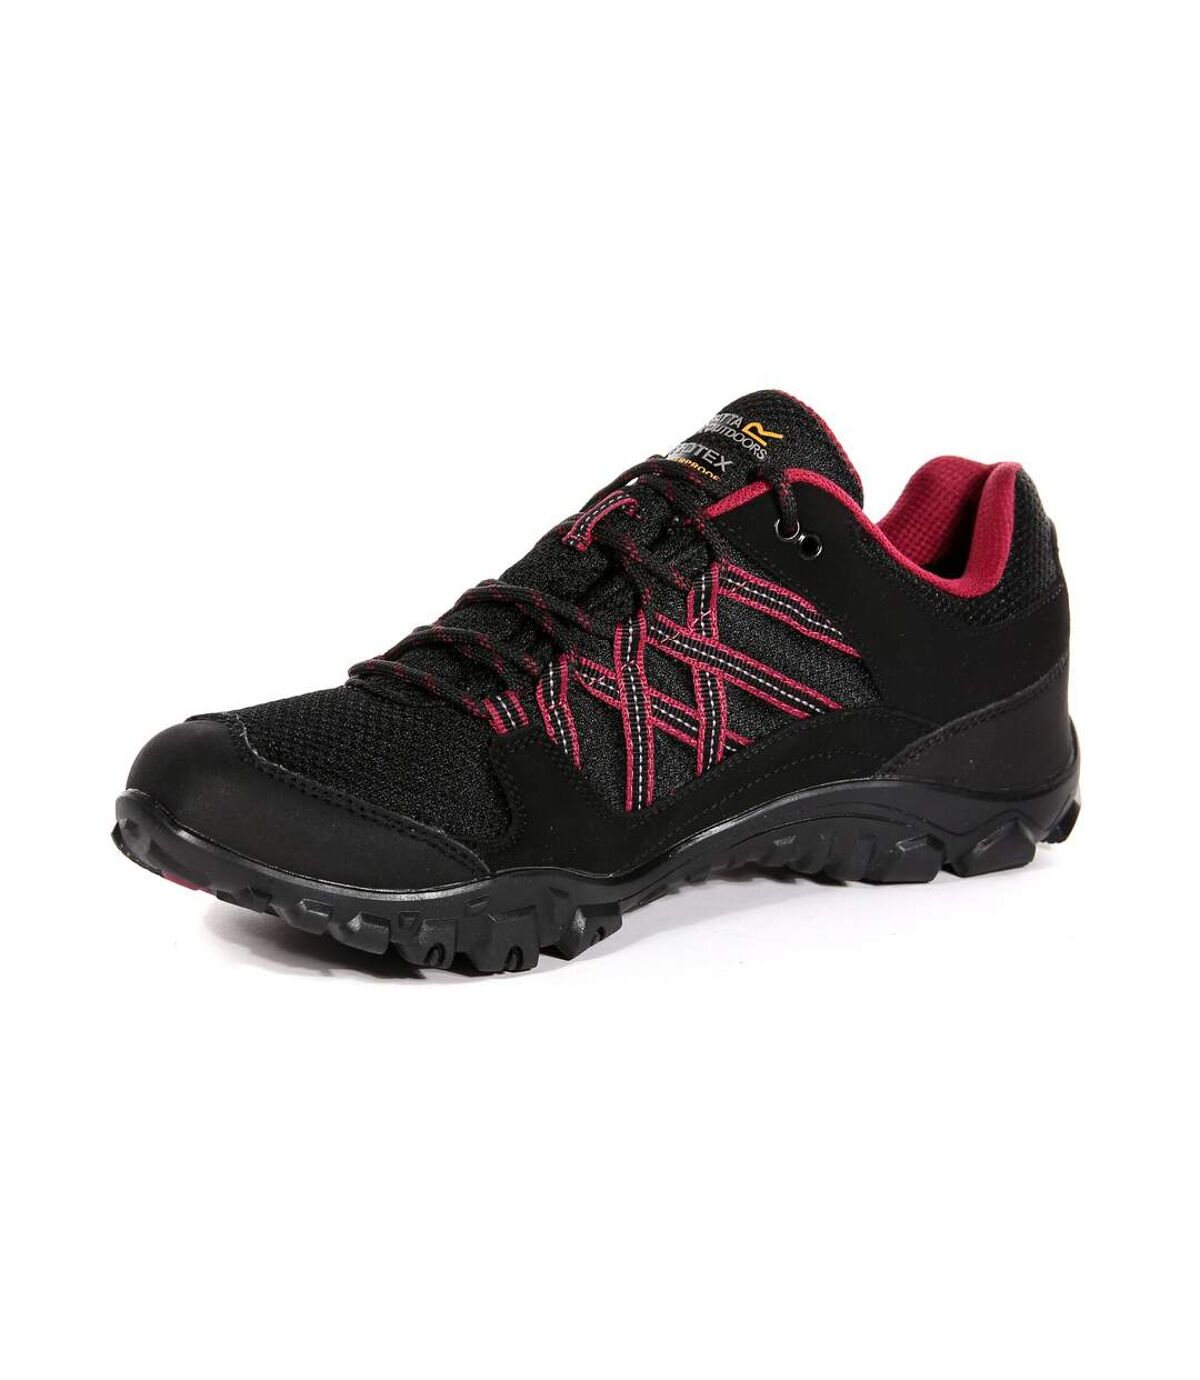 Regatta Womens/Ladies Edgepoint III Walking Shoes (Black/Beaujolais) - UTRG4551